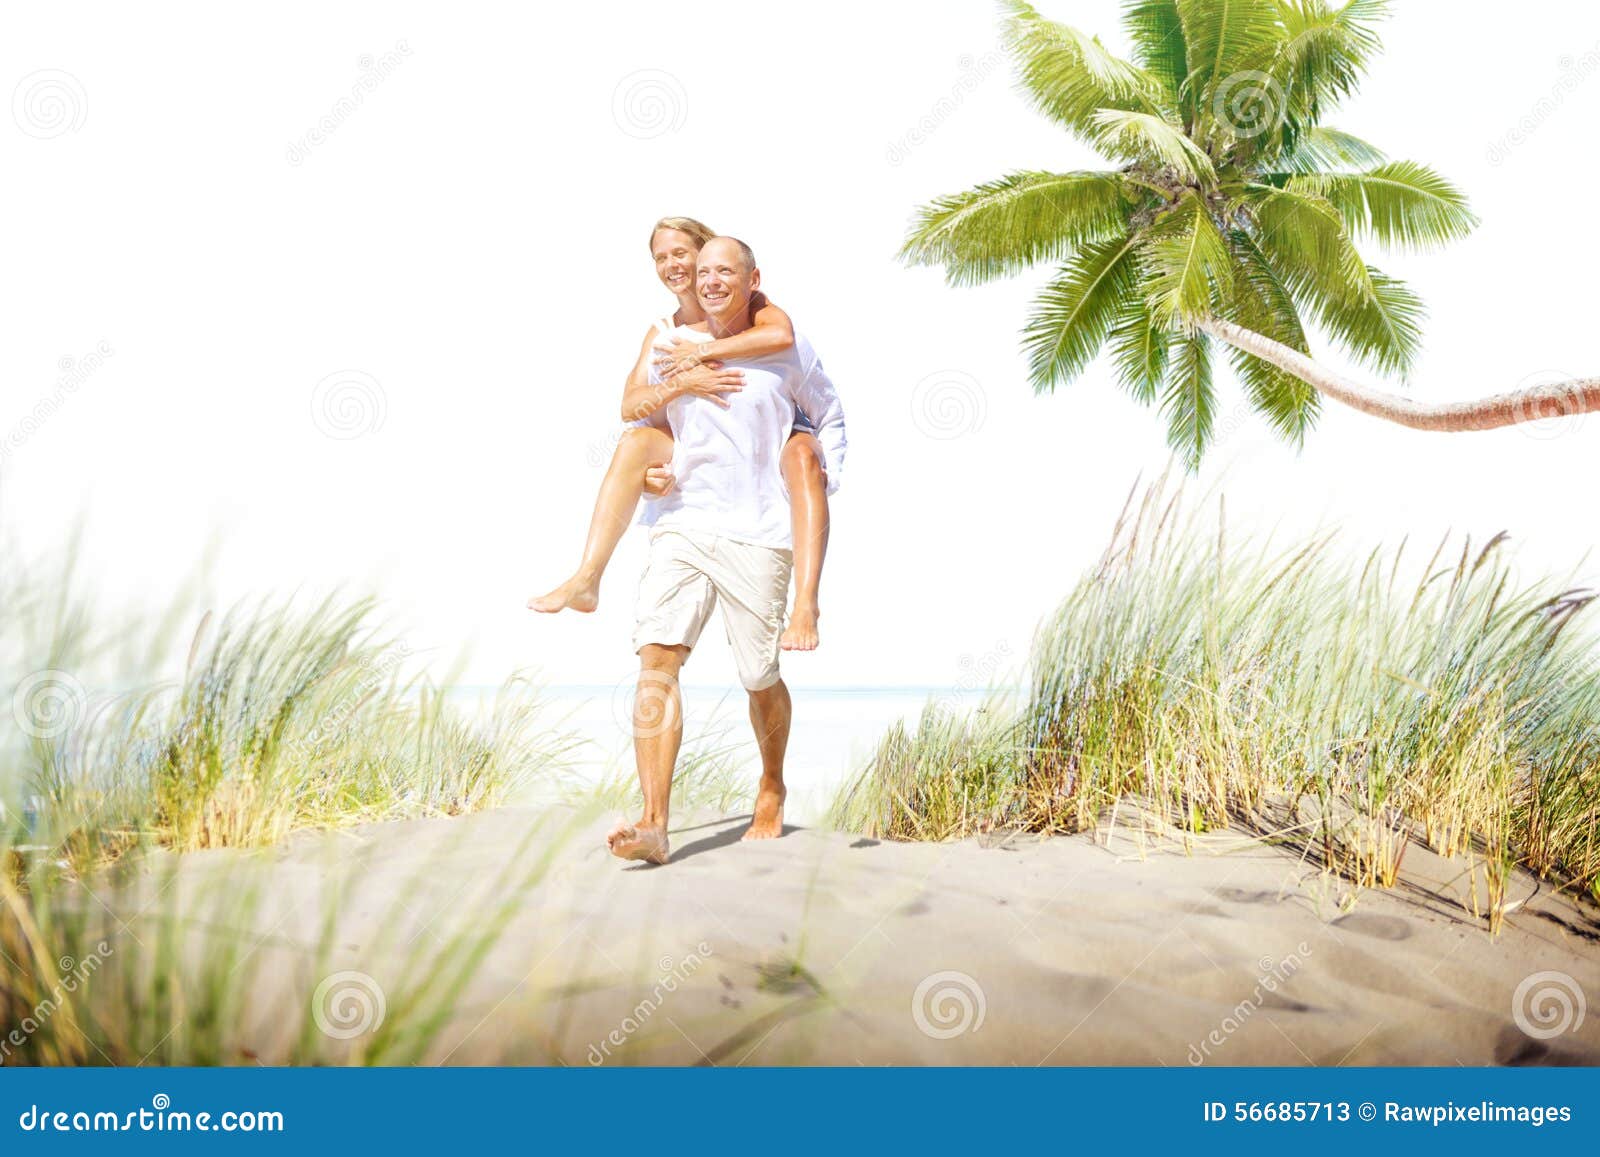 couple beach bonding getaway romance holiday concept